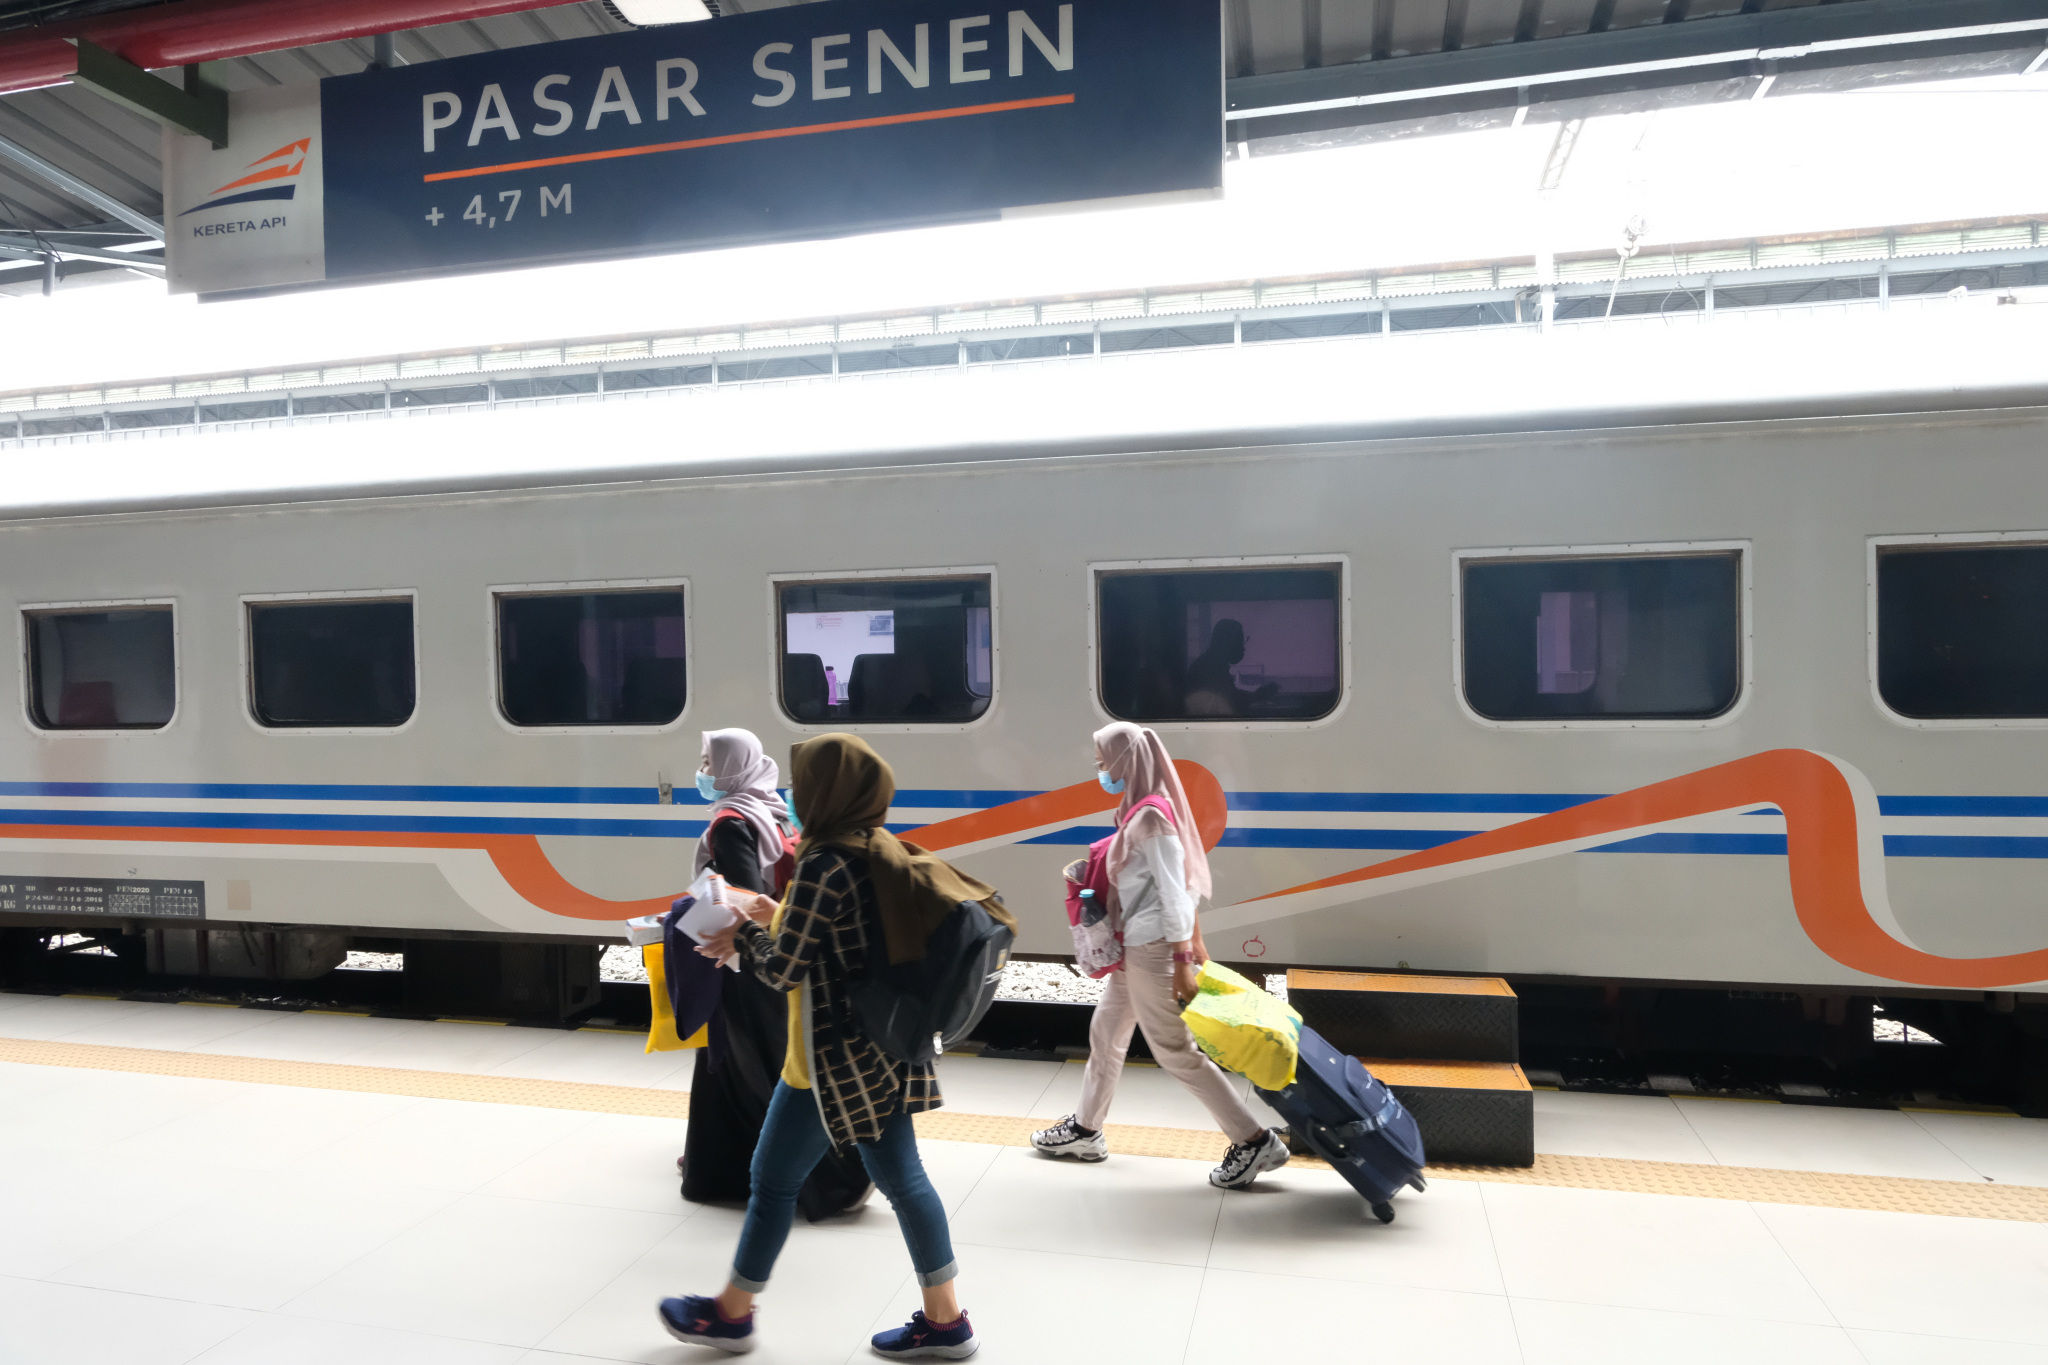 <p>Penumpang kereta api berjalan di peron menuju rangkaian kereta api Matarmaja relasi Jakarta-Malang yang diberangkatkan dari stasiun Pasar Senen, Jakarta, Selasa, 27 Oktober 2020. Foto: Ismail Pohan/TrenAsia</p>
